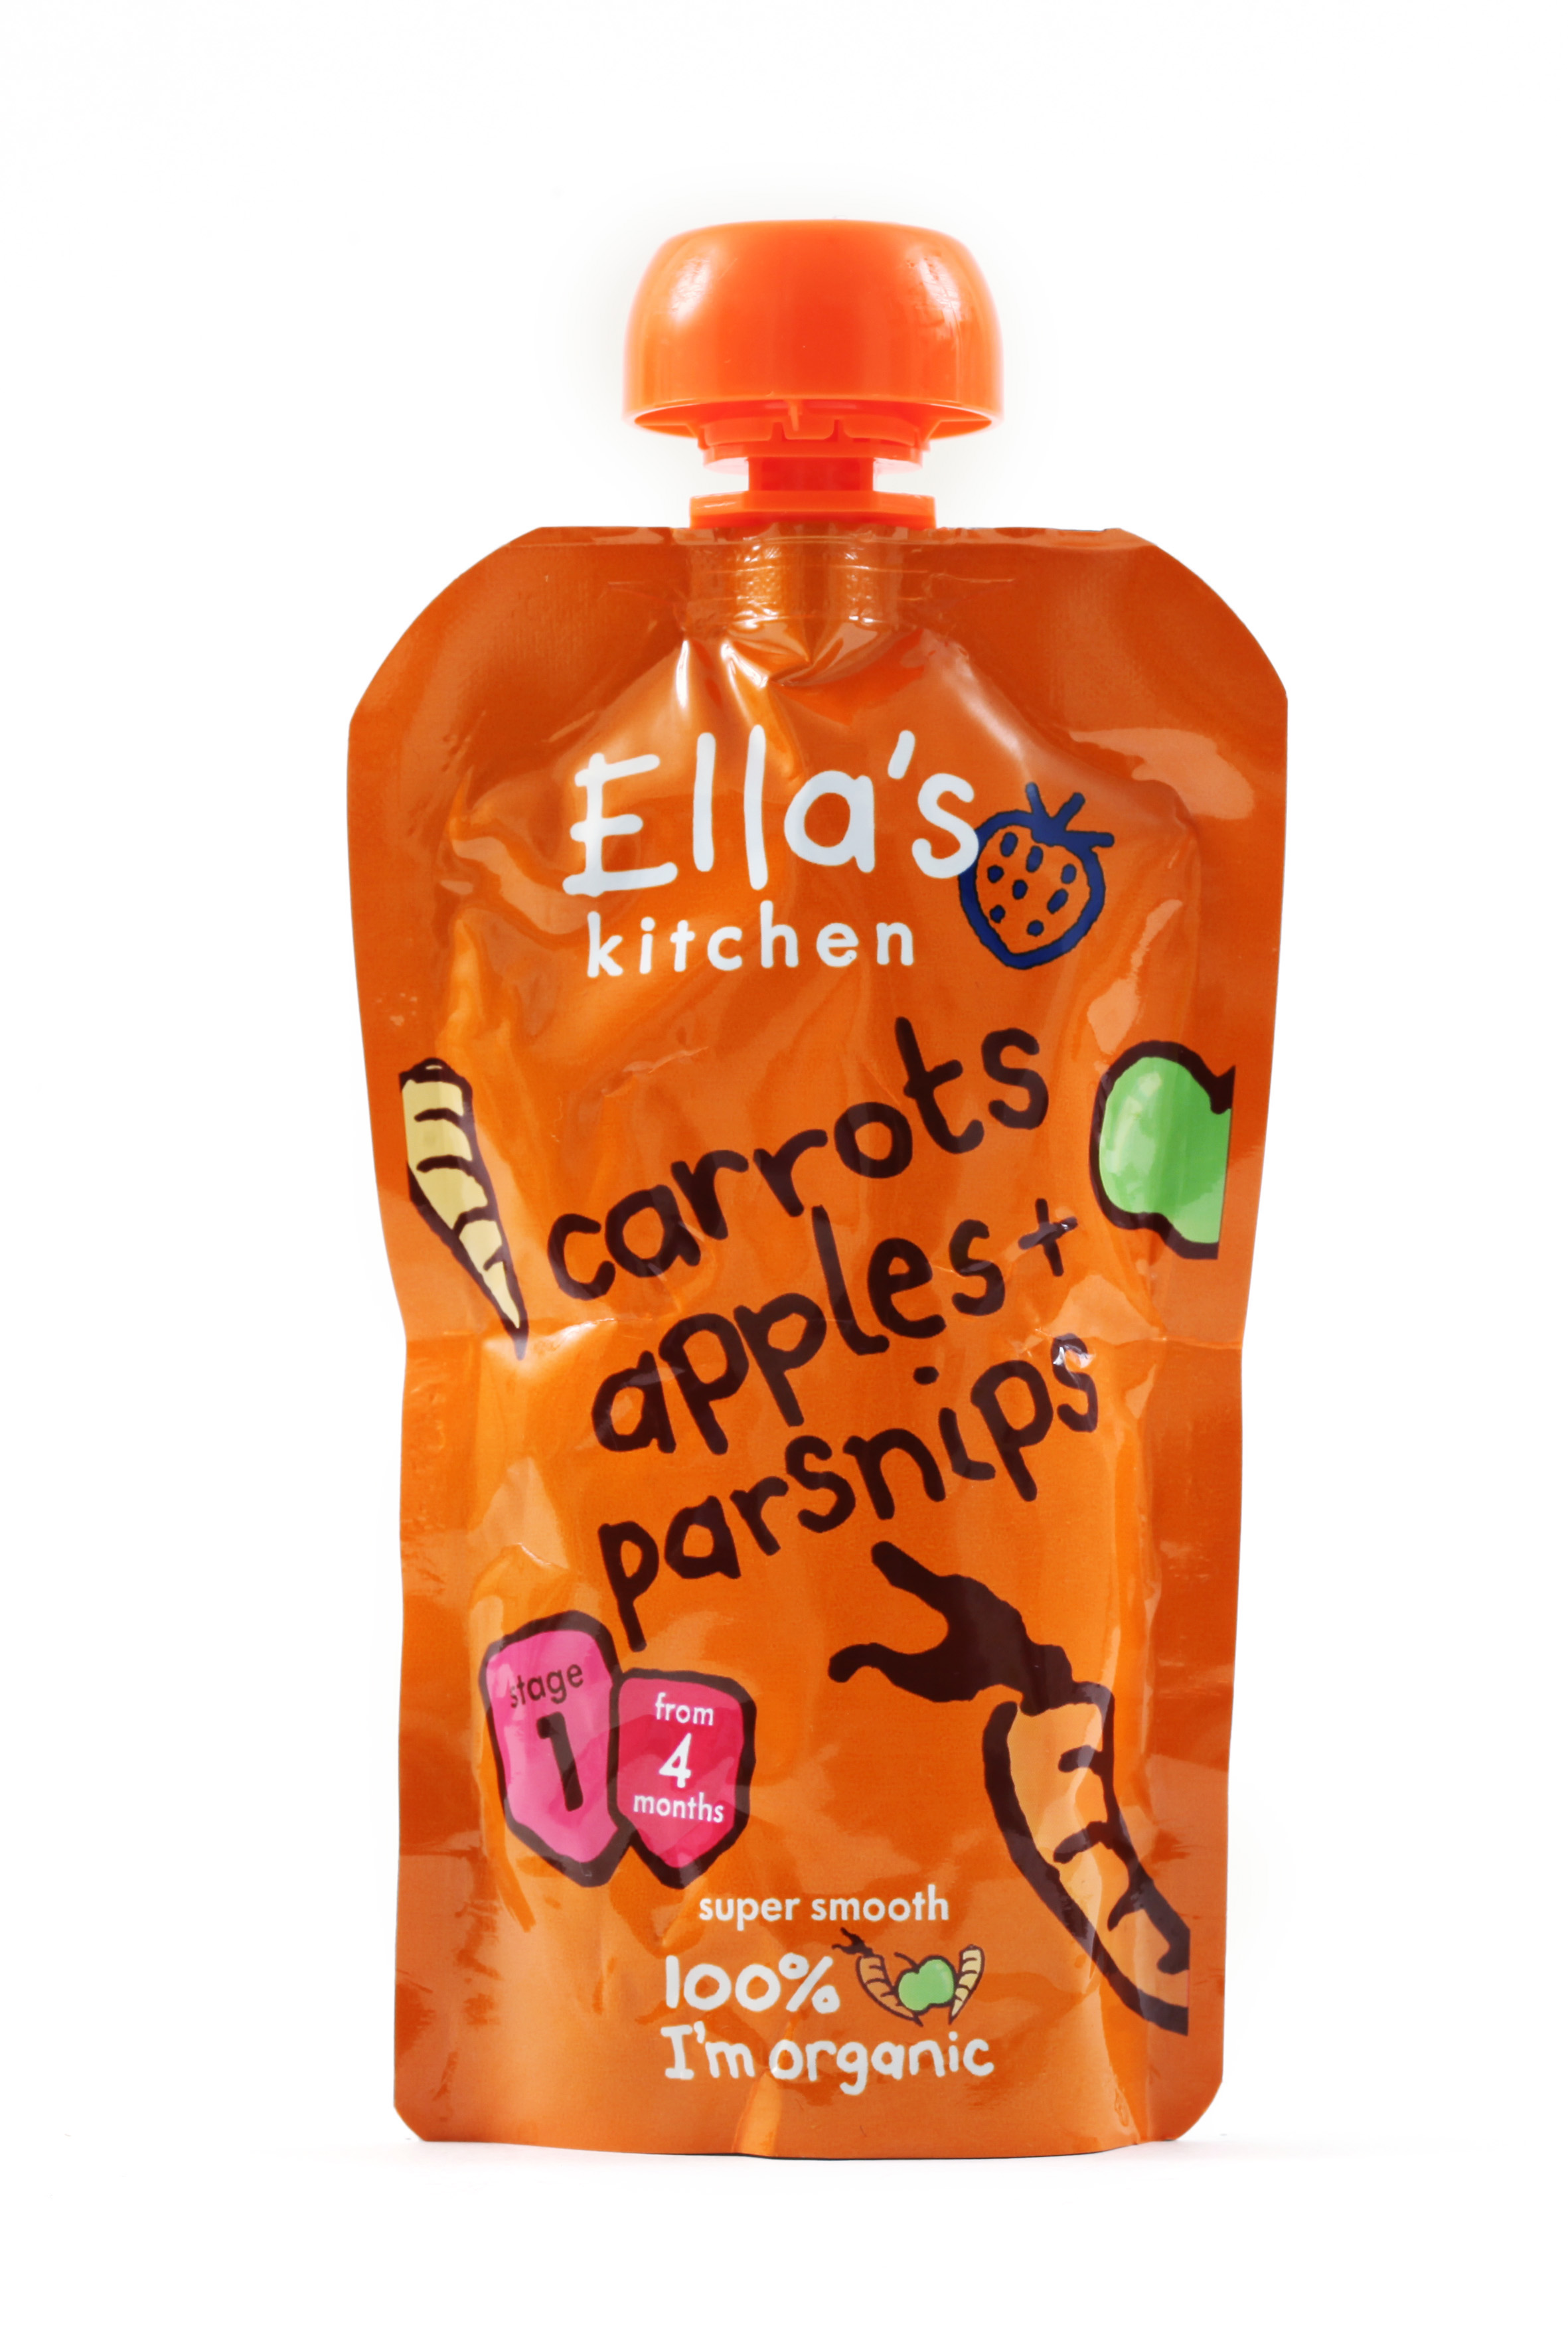 Ellas Kitchen Carrots Apples Parsnips 